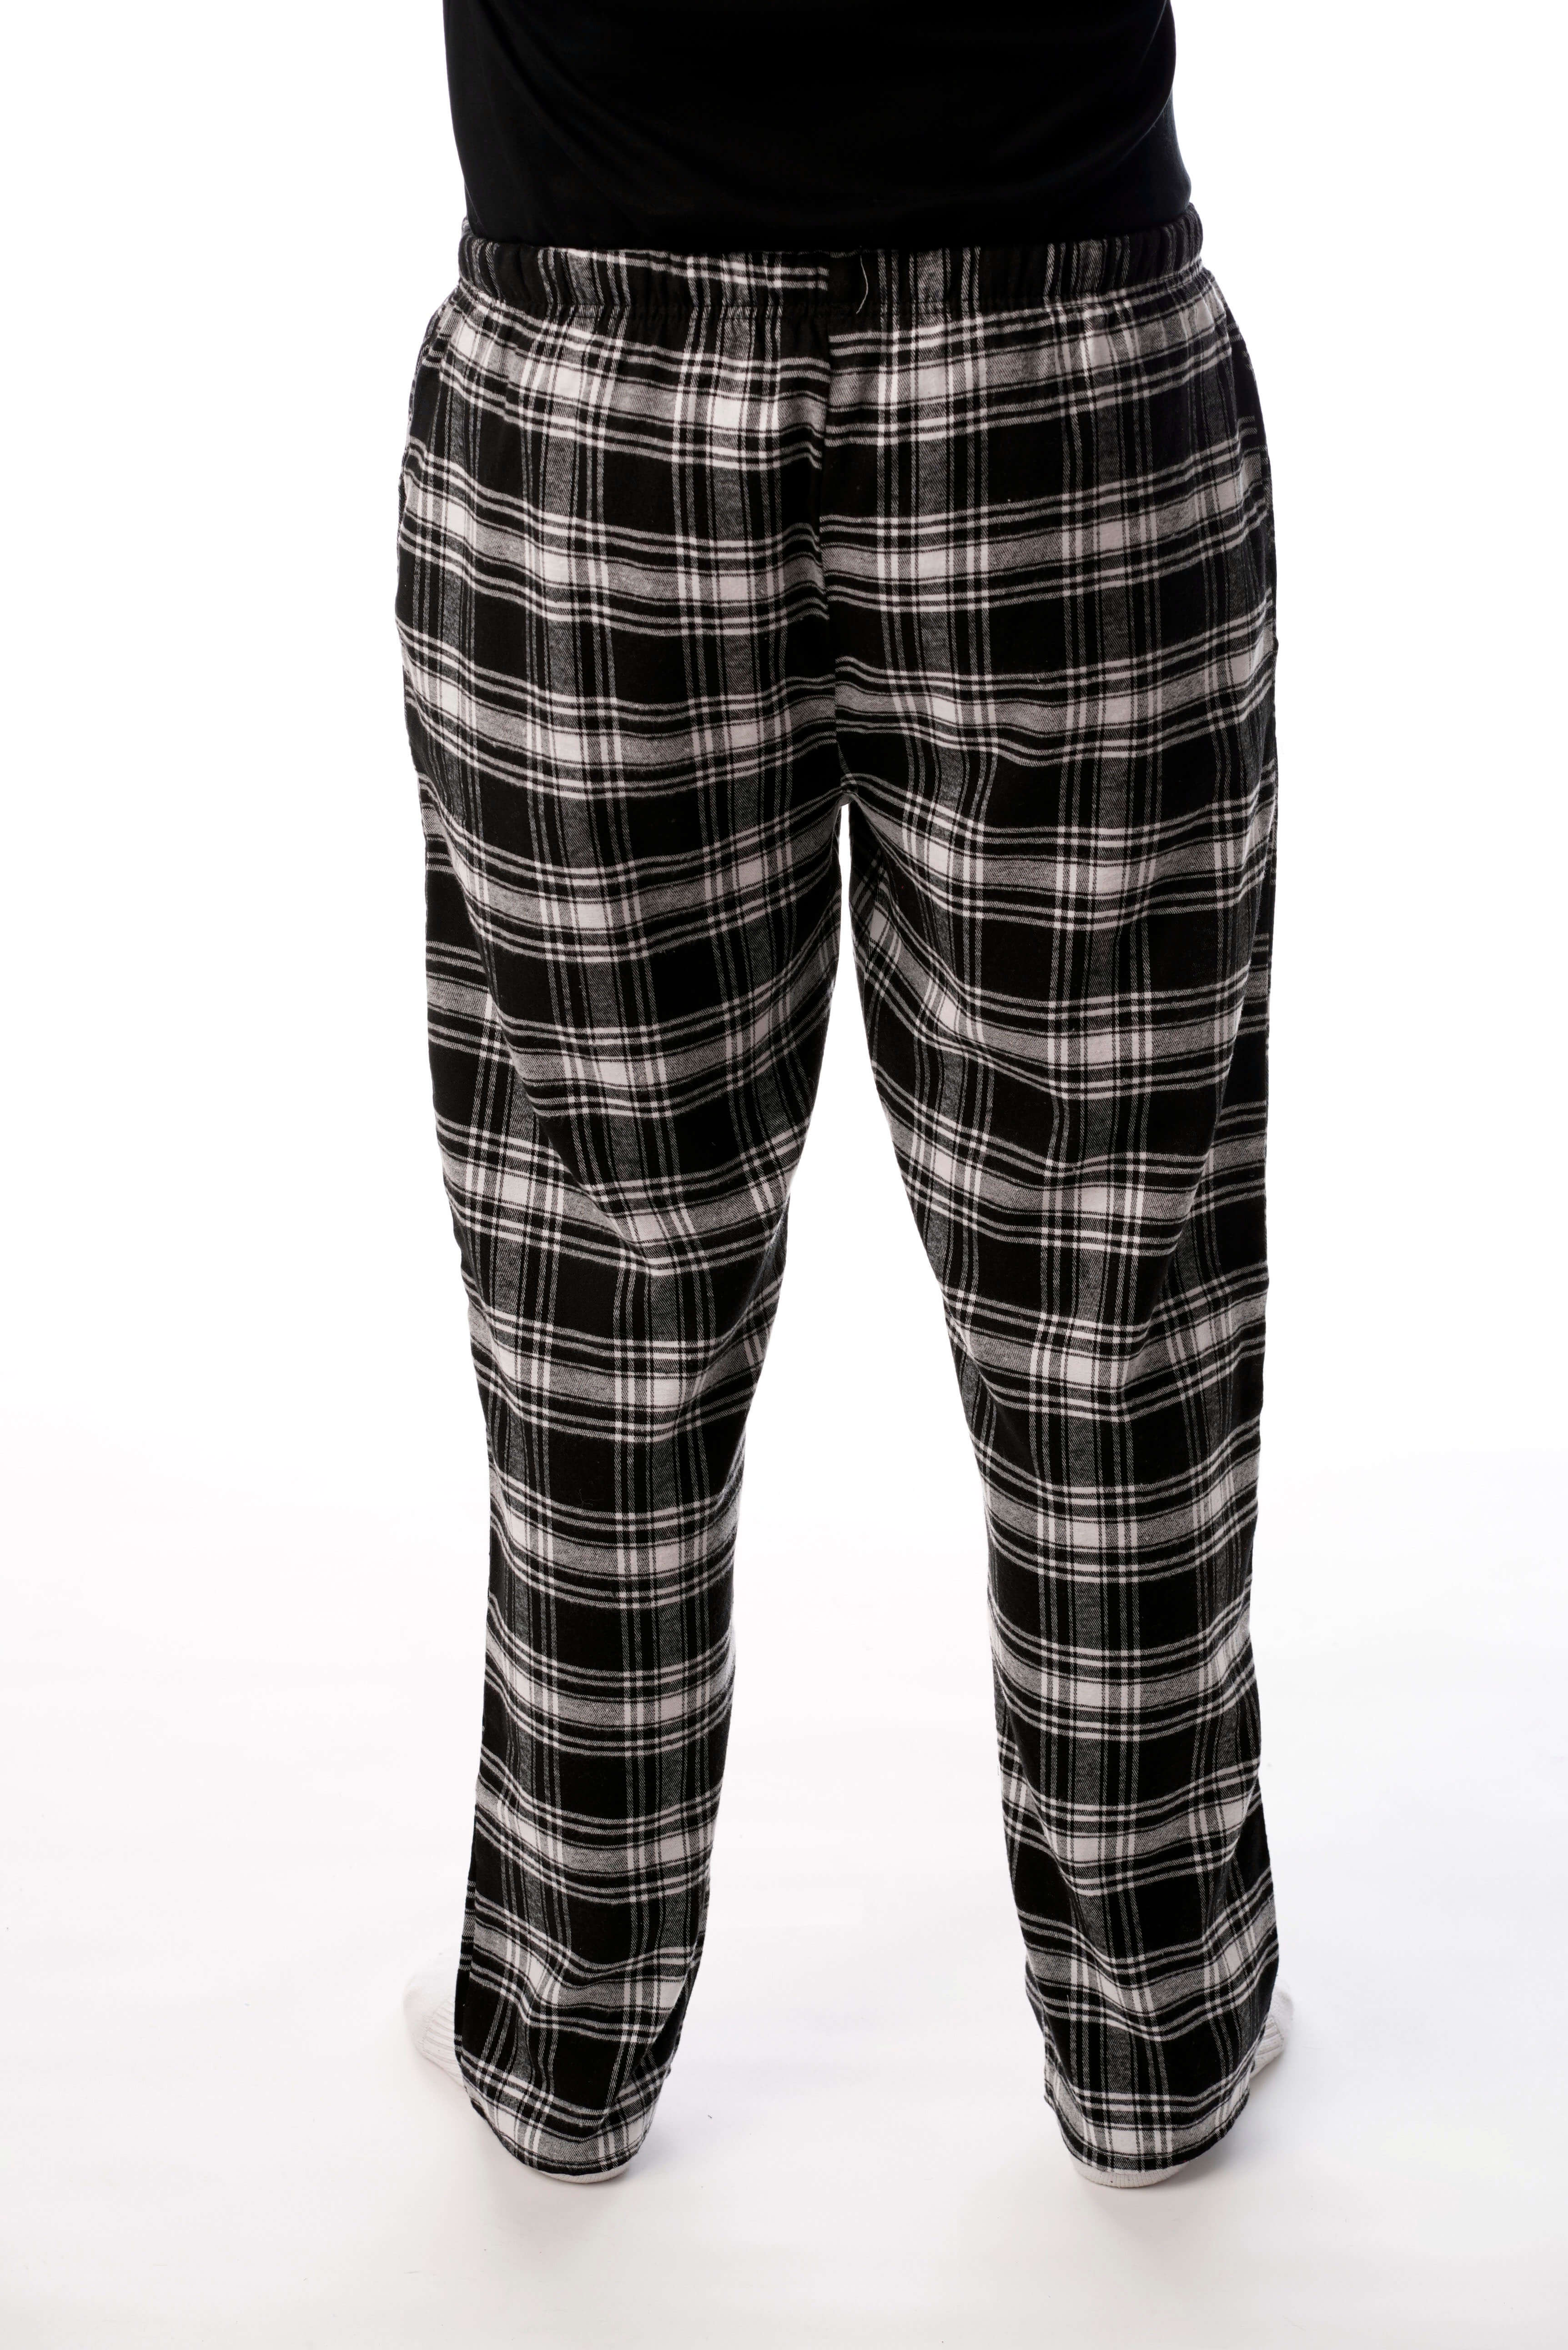 Mens Lounge Pants Size XL Pajamas Sleepwear Plaid Pockets PJs Black Gray Blue